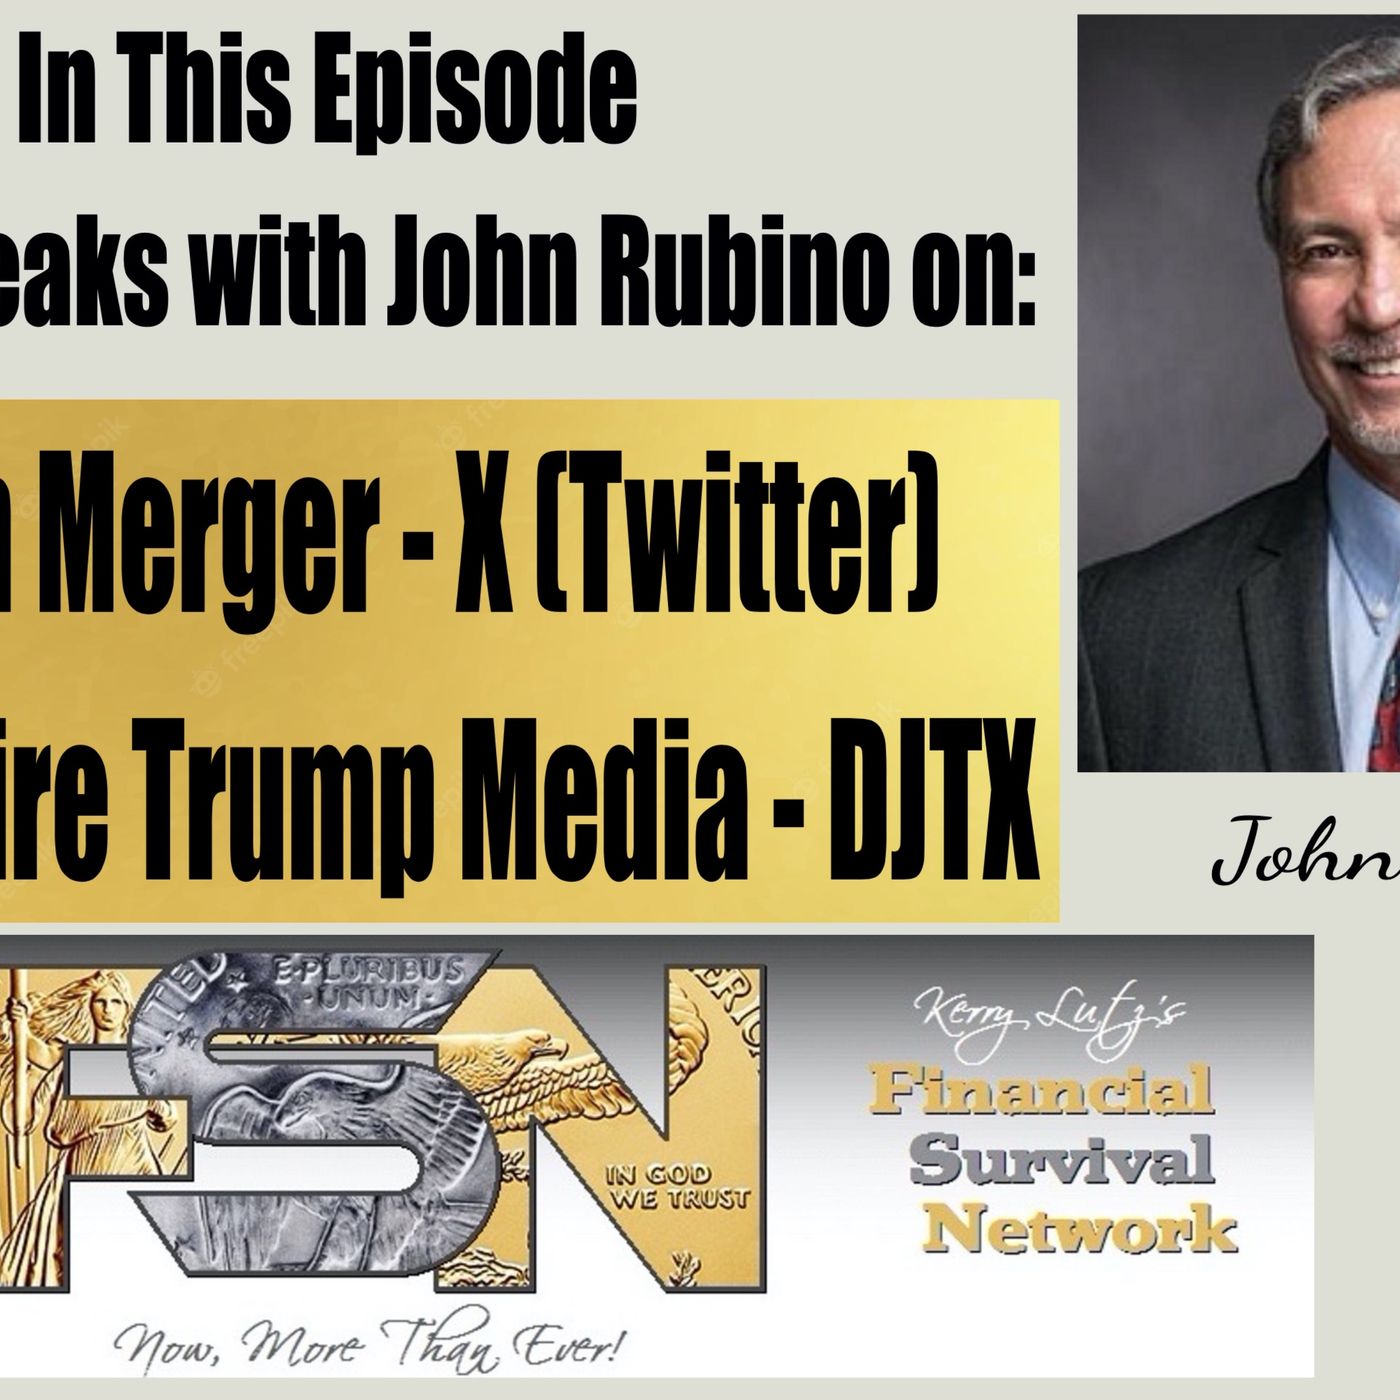 Dream Merger -- X (Twitter) to Acquire Trump Media -- DJTX - John Rubino #6038